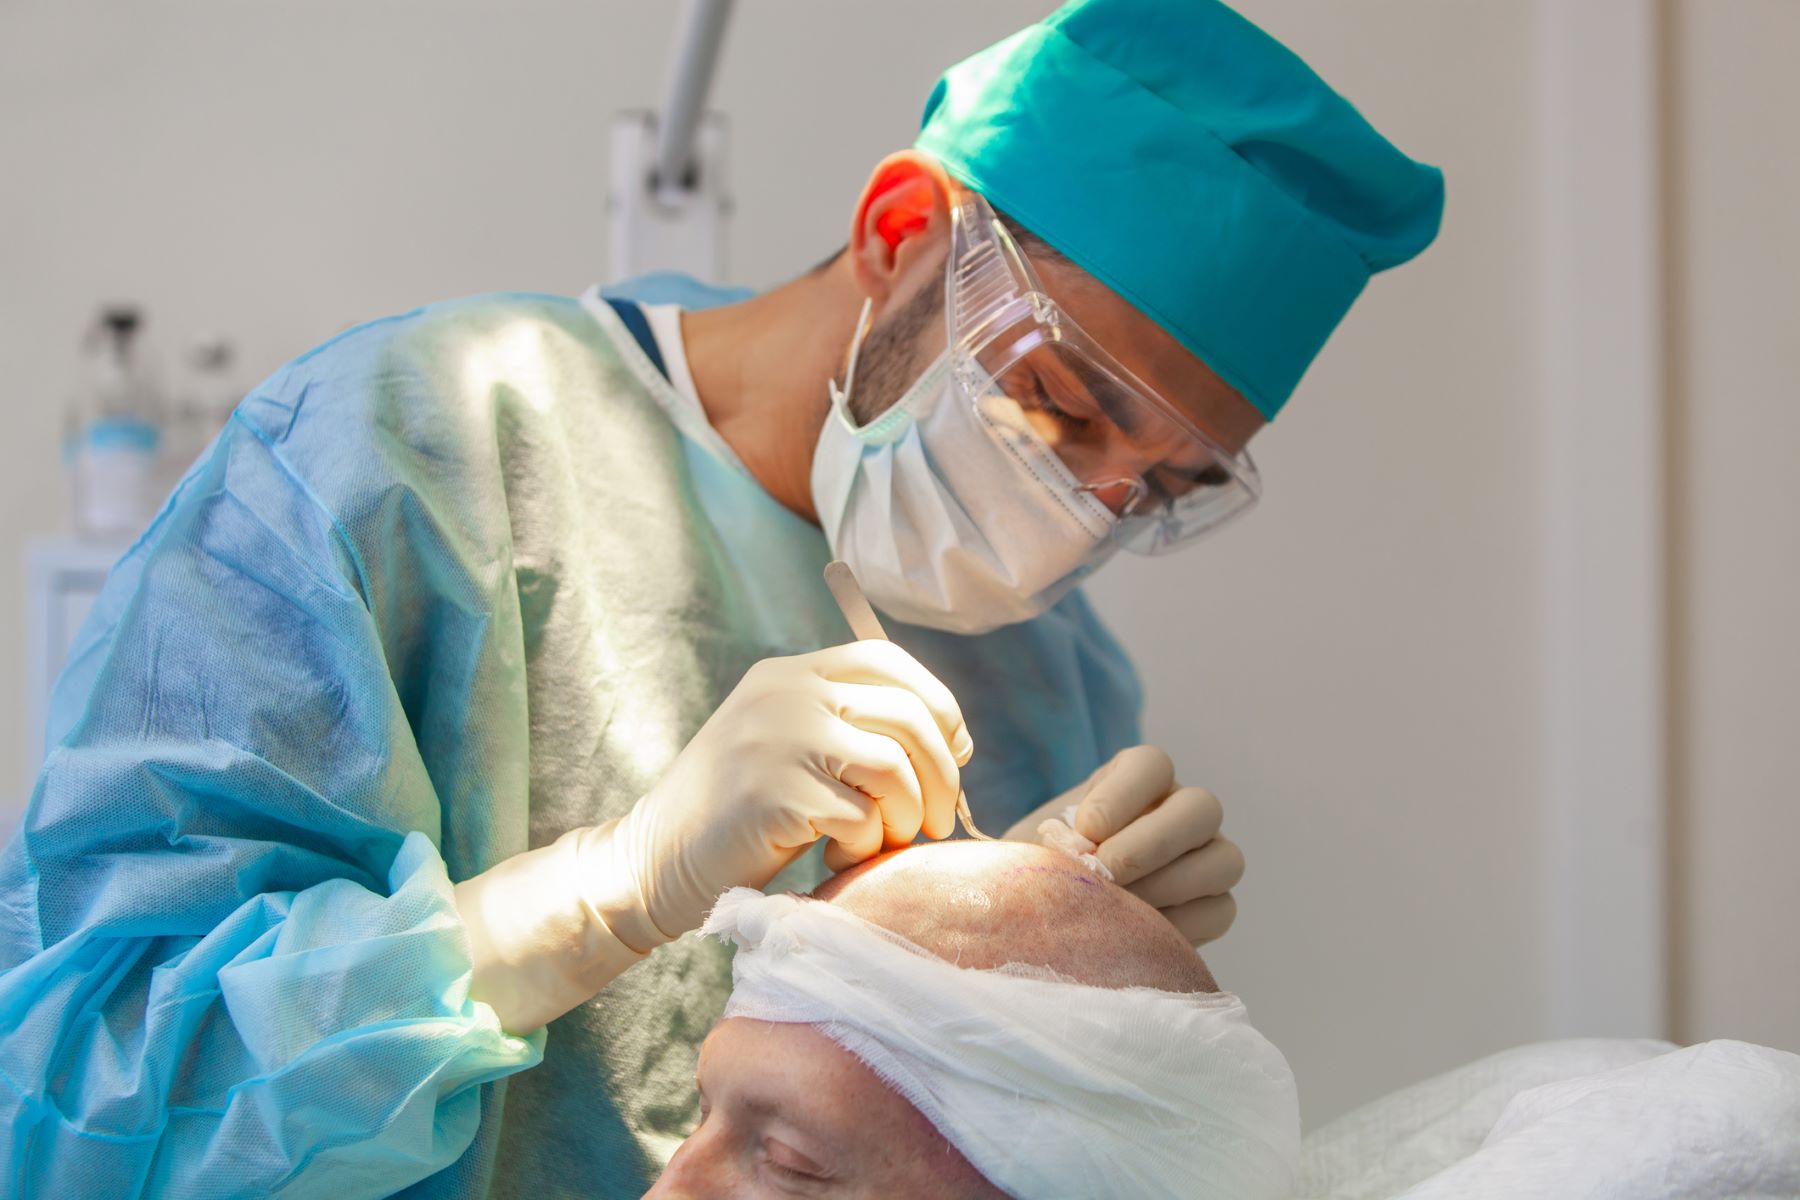 Surgeon performing hair transplant surgery